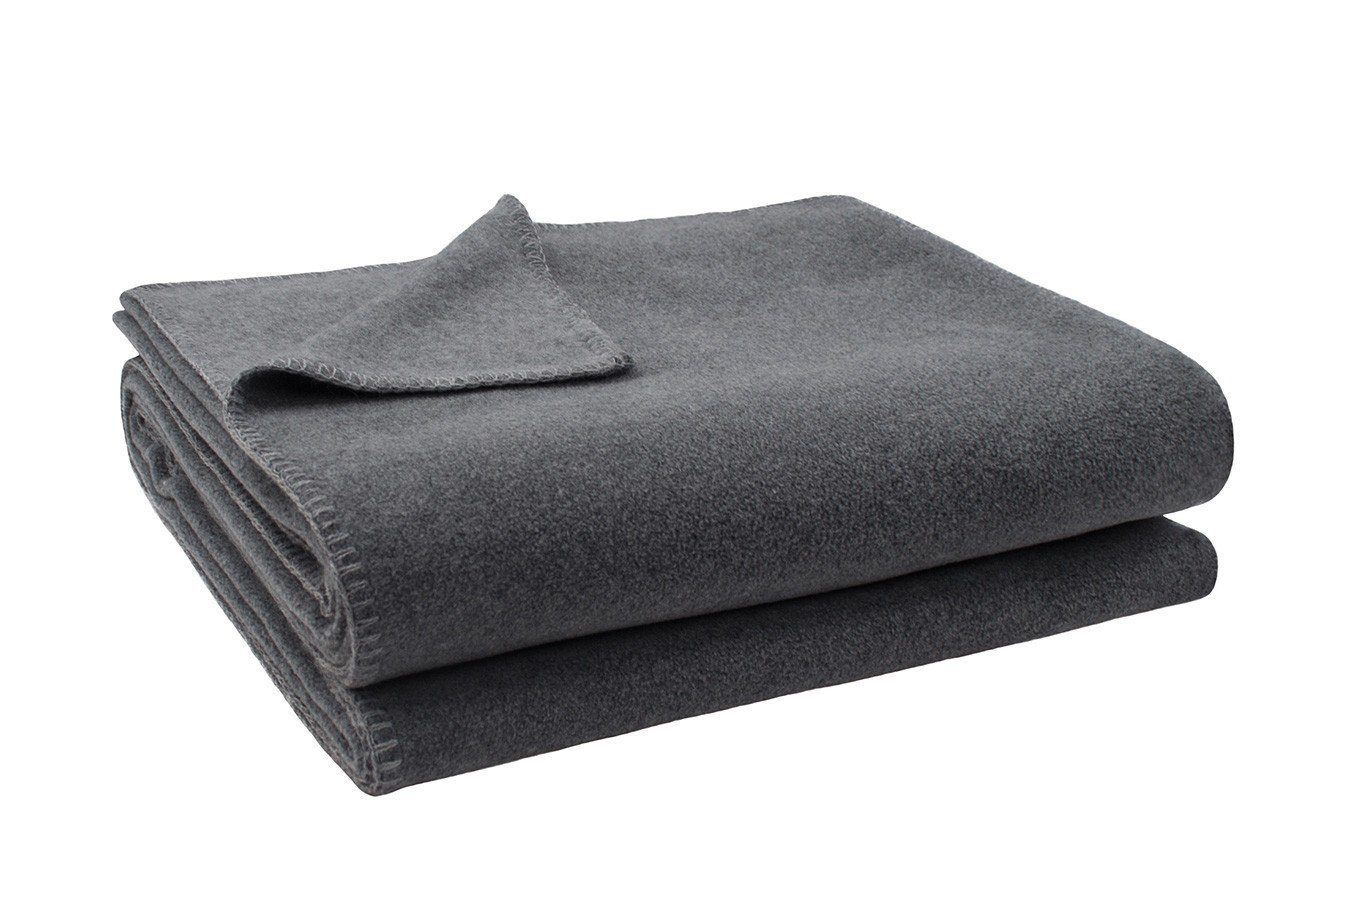 Wohndecke Soft-Fleece Decke 220 x 240 cm medium grau meliert, daslagerhaus living